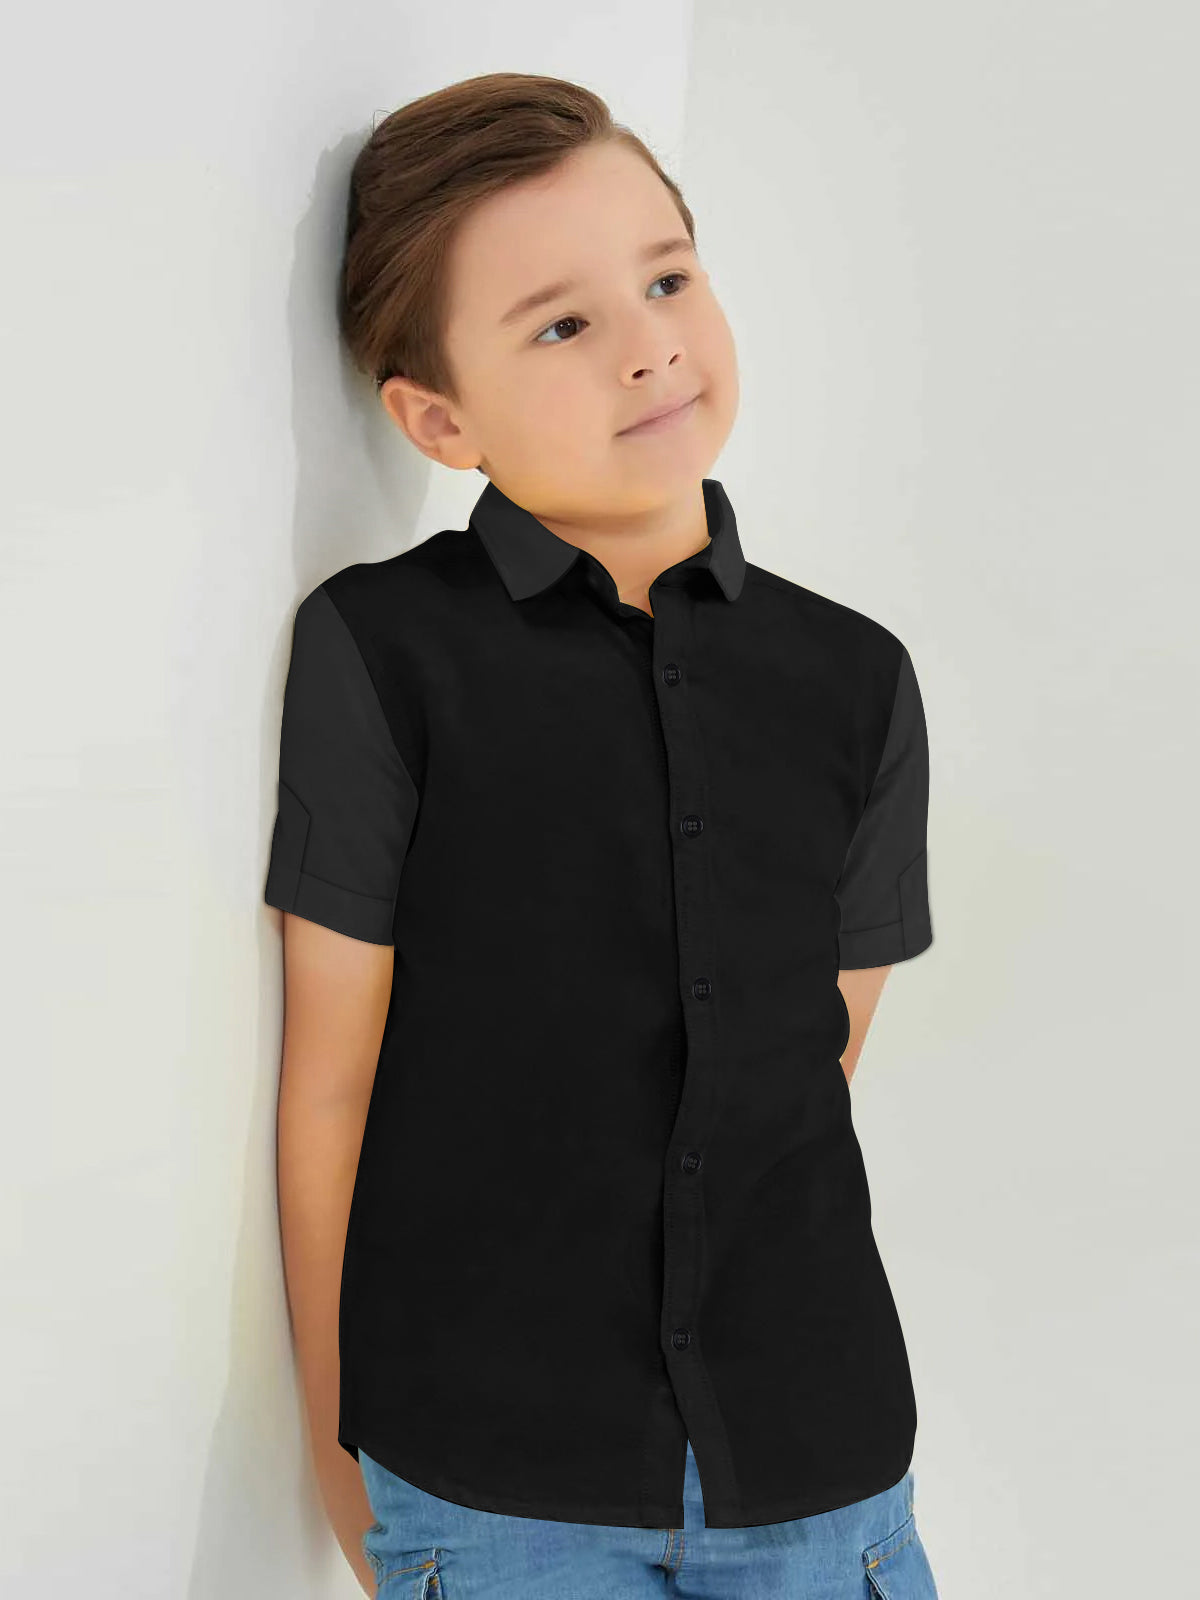 Louis Vicaci Super Stretchy Slim Fit Half Sleeve Lycra Casual Shirt For Kids-Black-BR547